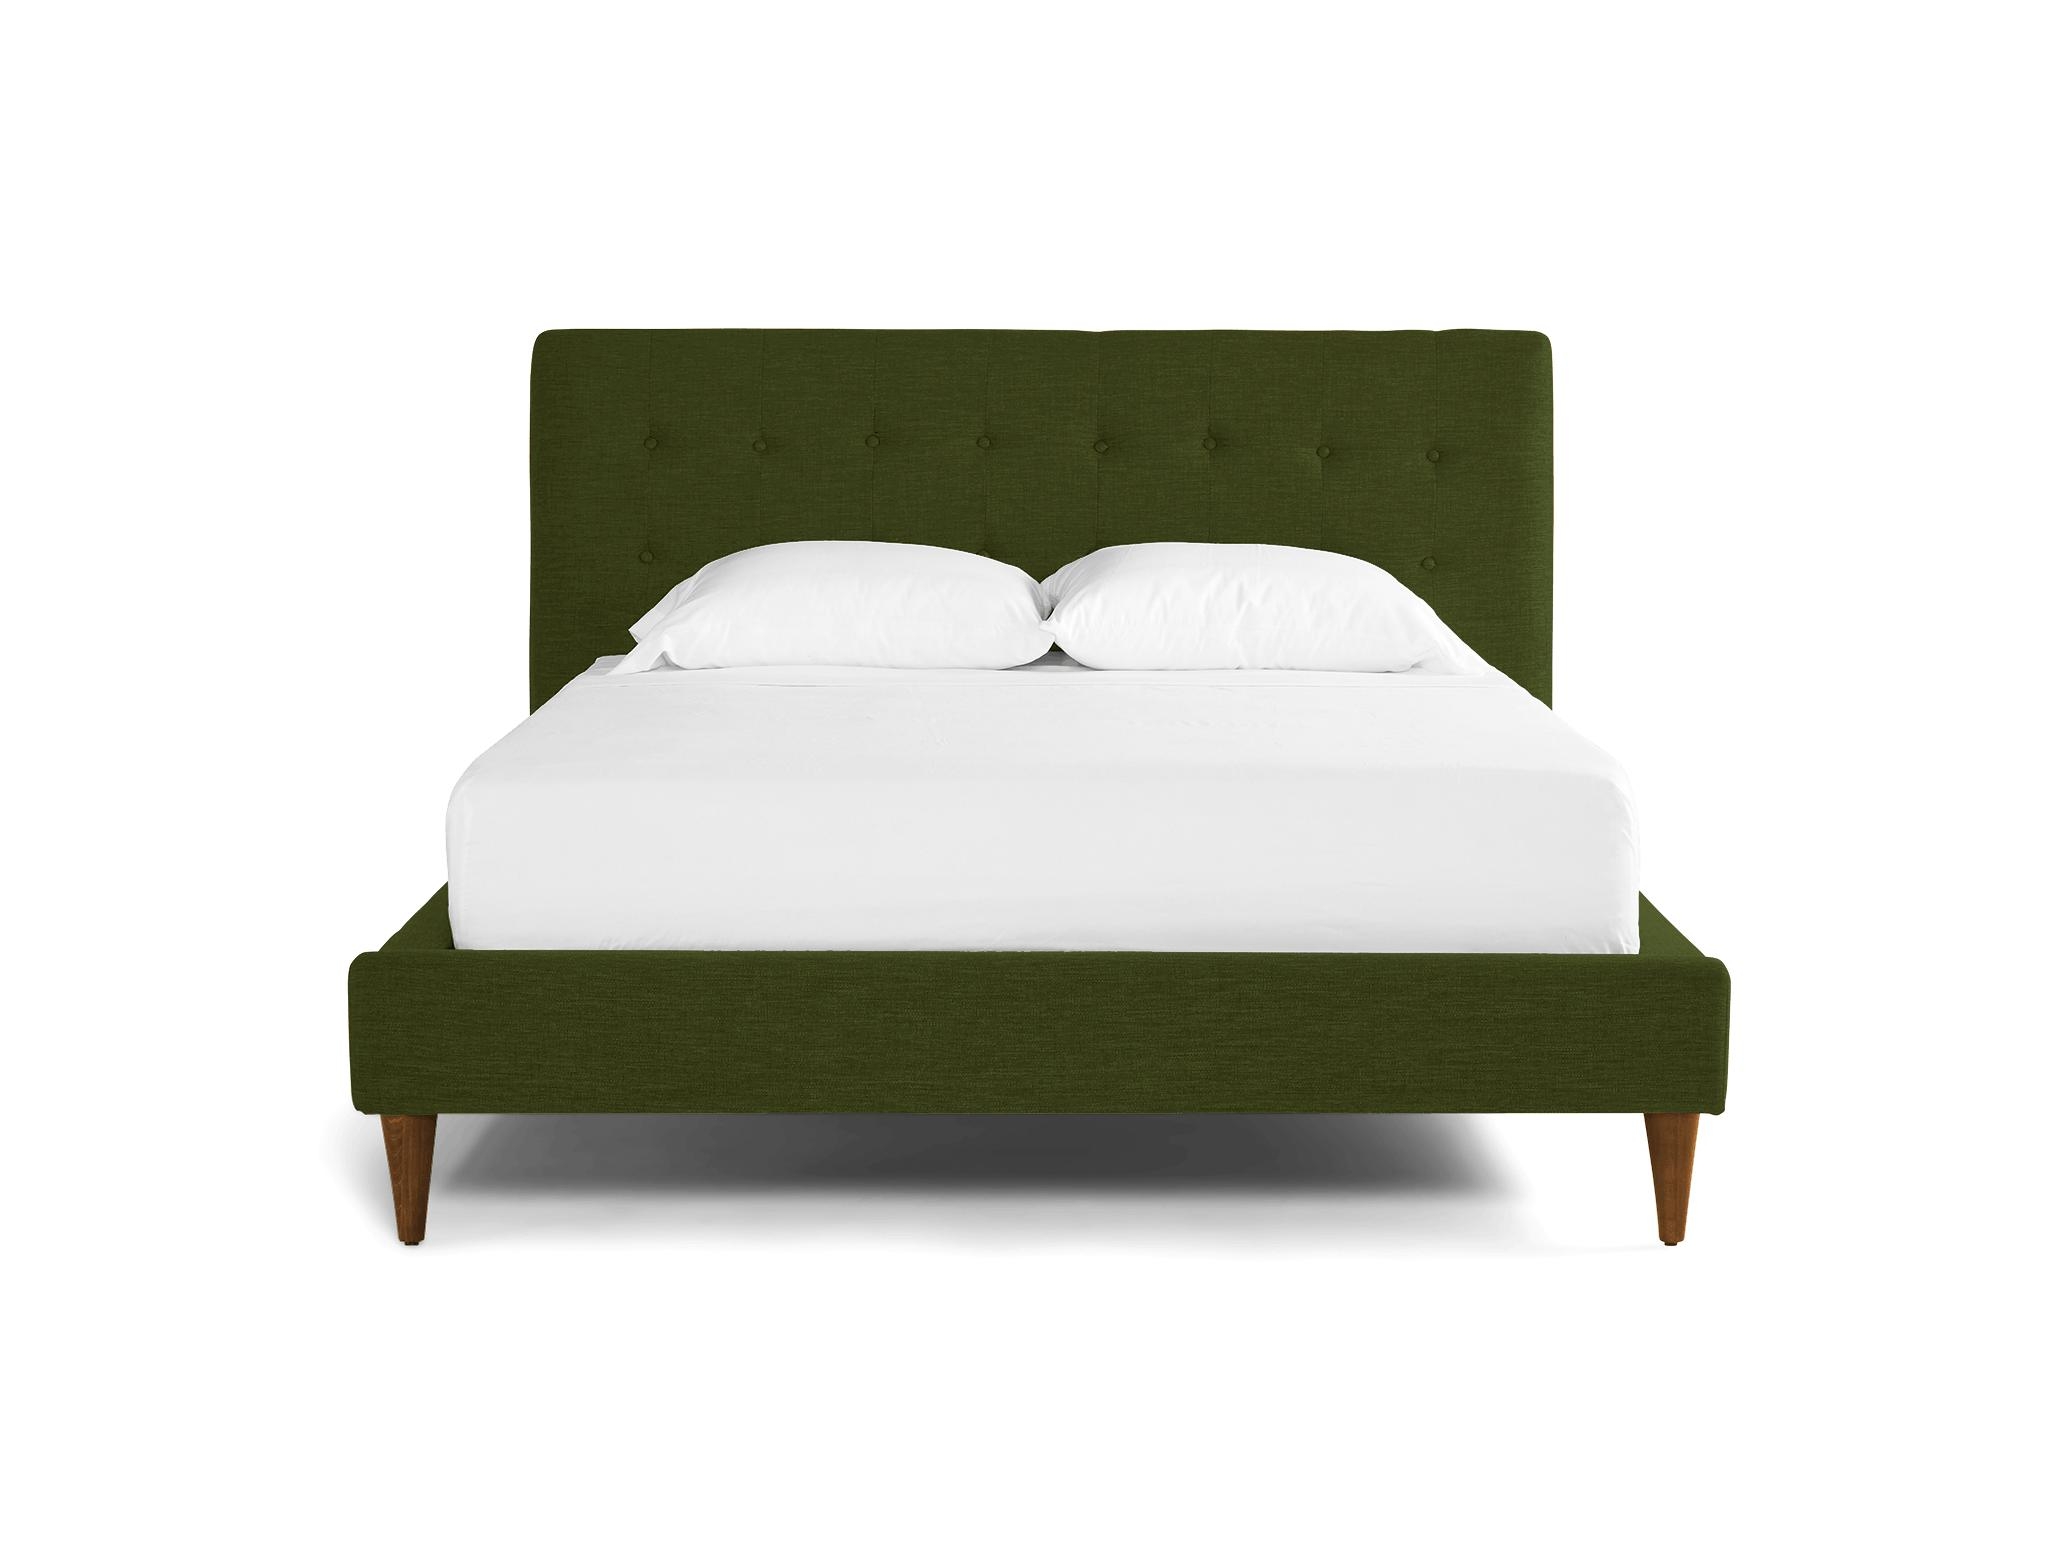 Green Eliot Mid Century Modern Bed - Royale Forest - Mocha - Eastern King - Image 0